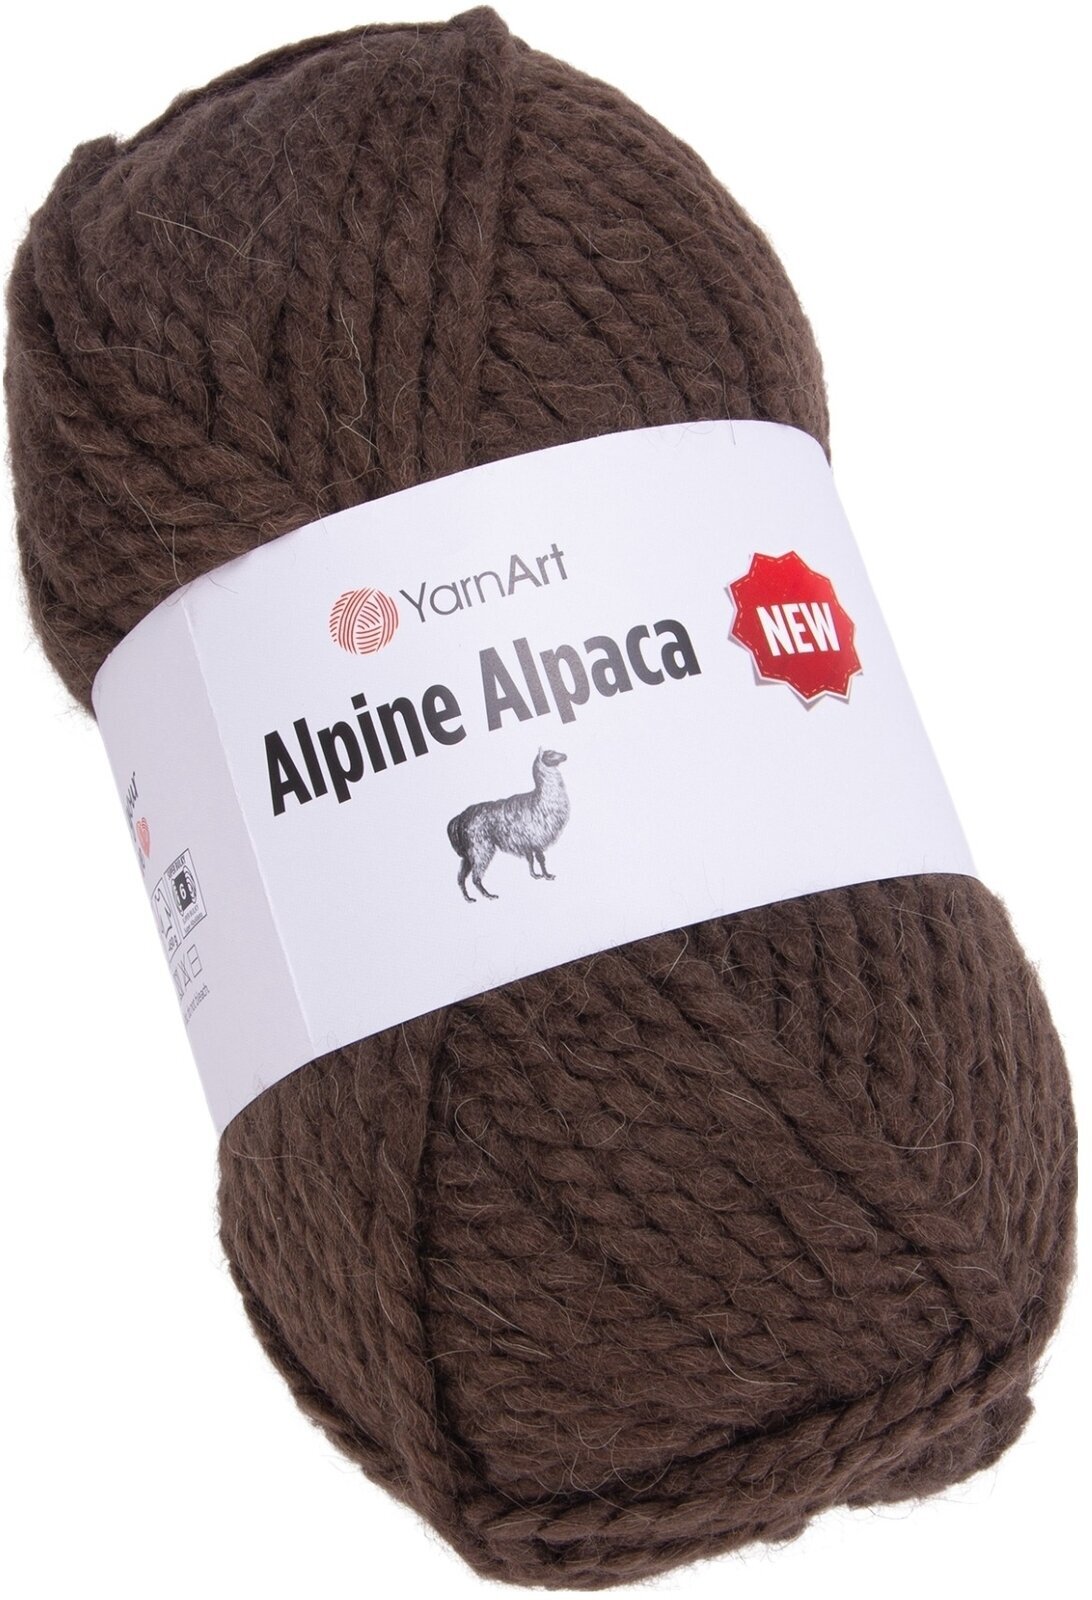 Strickgarn Yarn Art Alpine Alpaca 1431